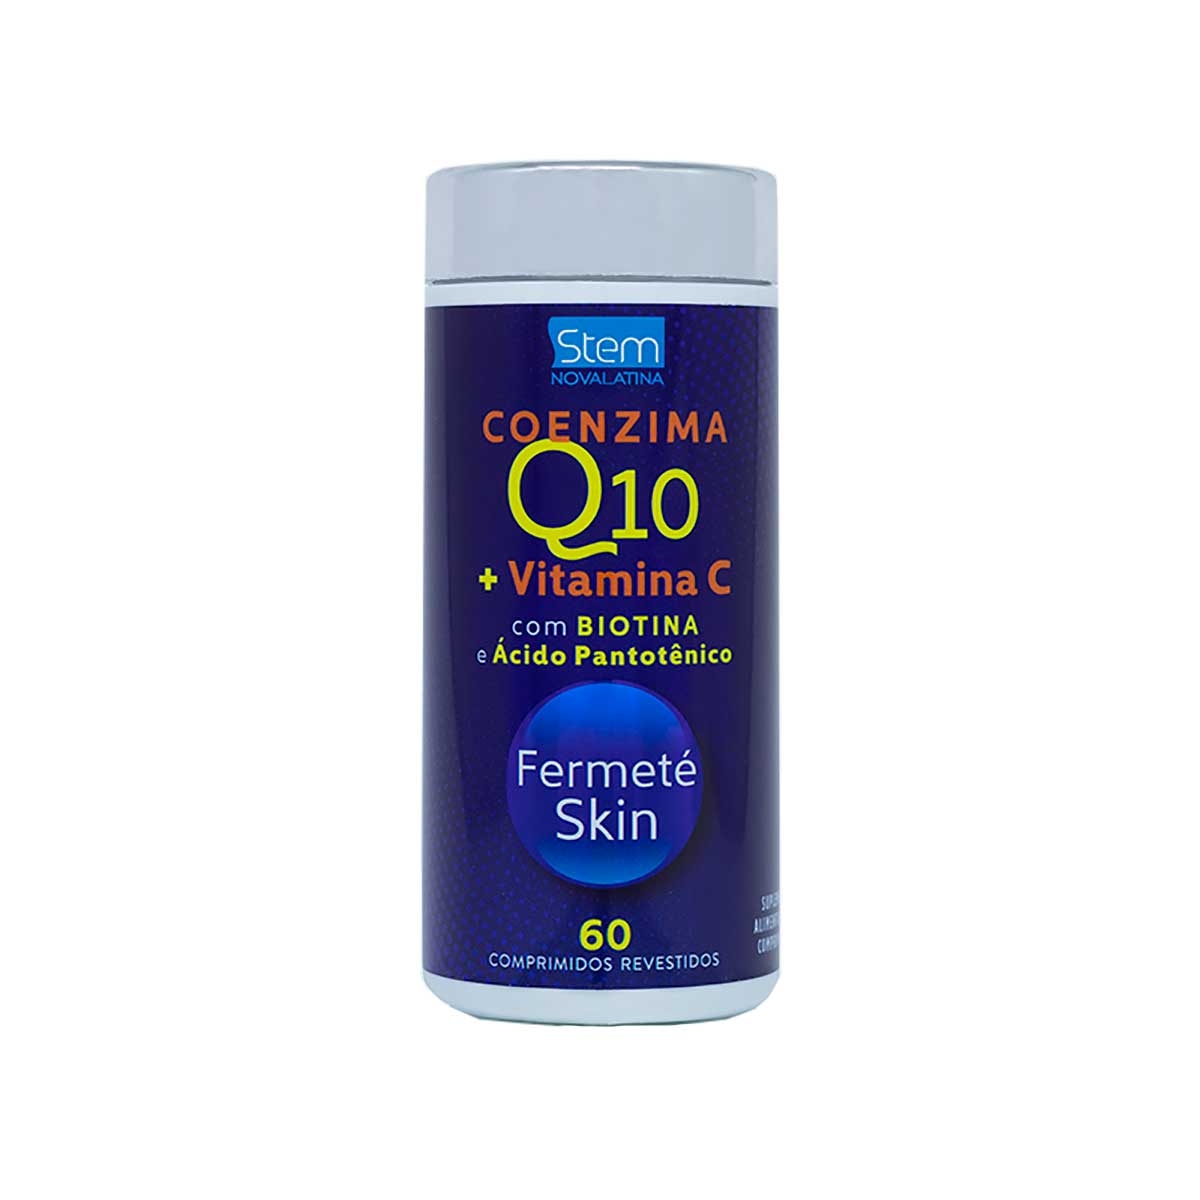 Suplemento Alimentar Fermeté Skin Stem Coenzima Q10 + Vitamina C com 60 comprimidos